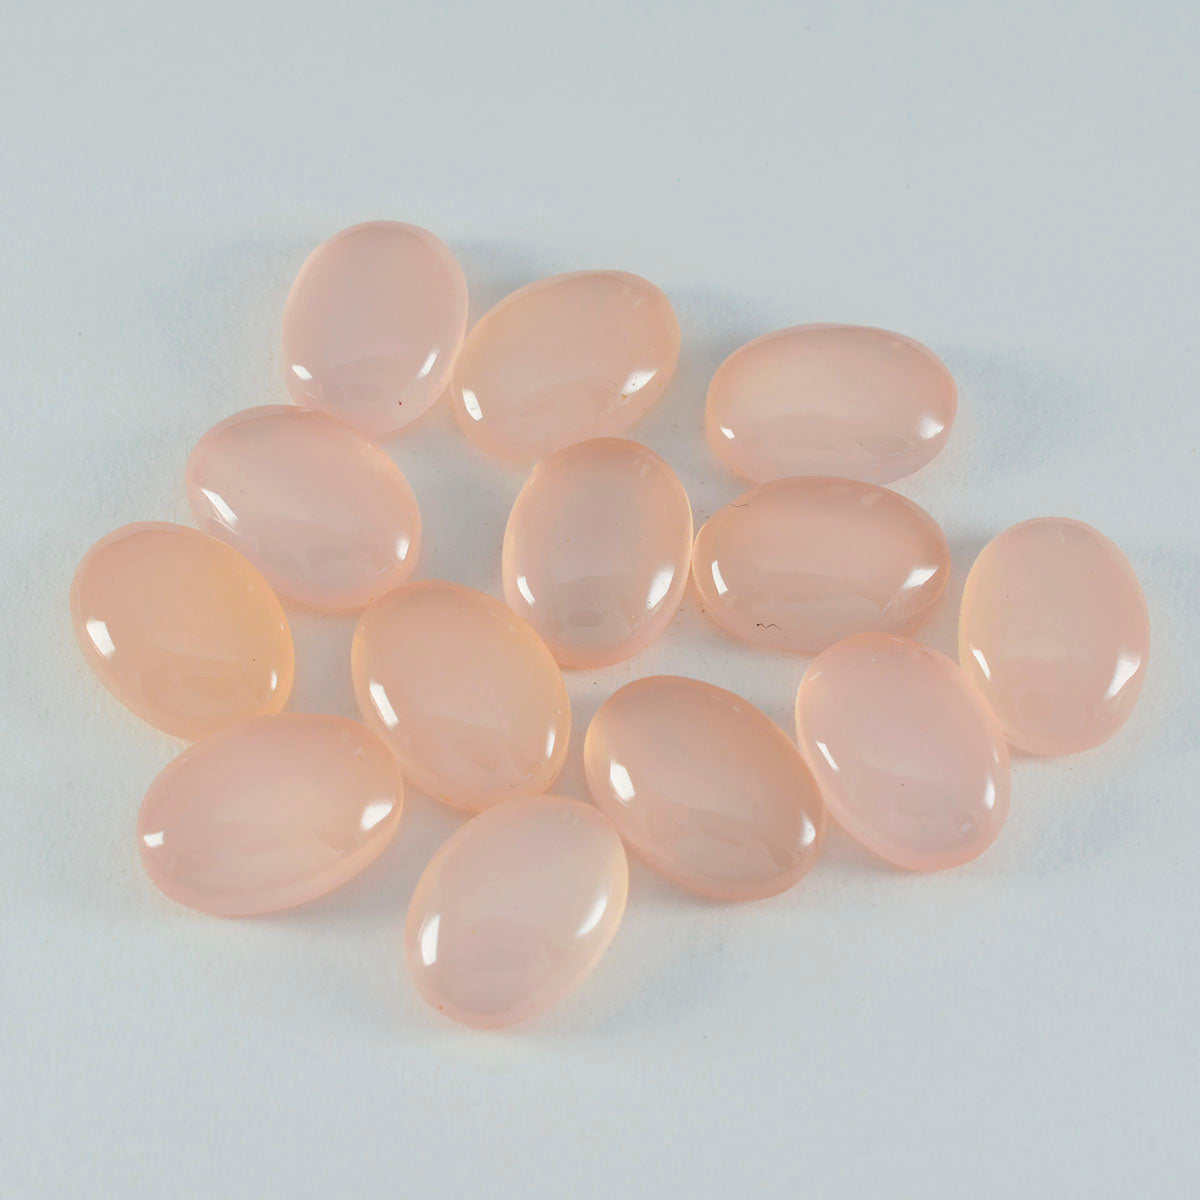 Riyogems 1PC Pink Rose Quartz Cabochon 8x10 mm Oval Shape great Quality Loose Stone